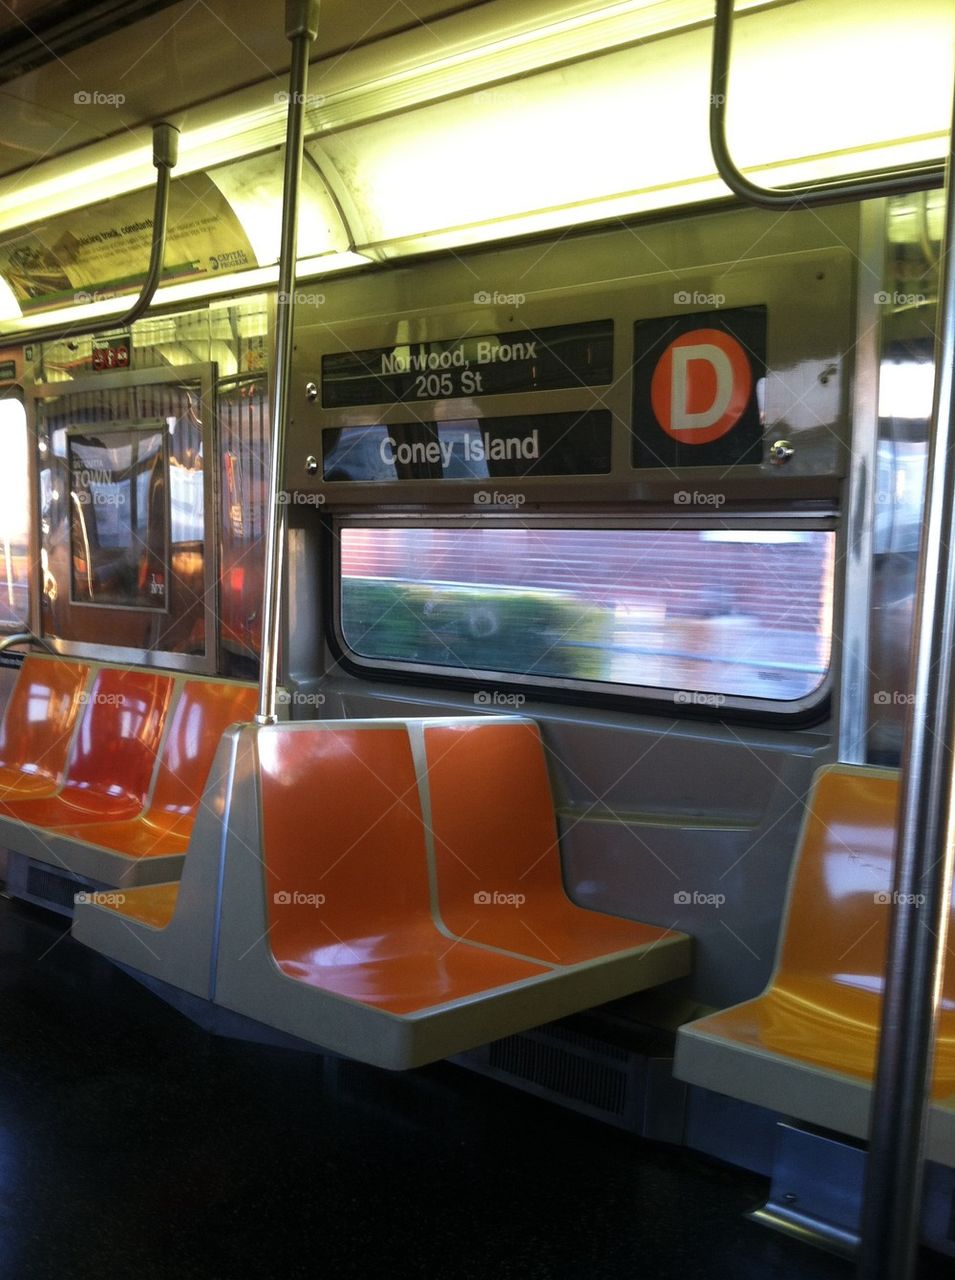 NYC Subway to Coney Island